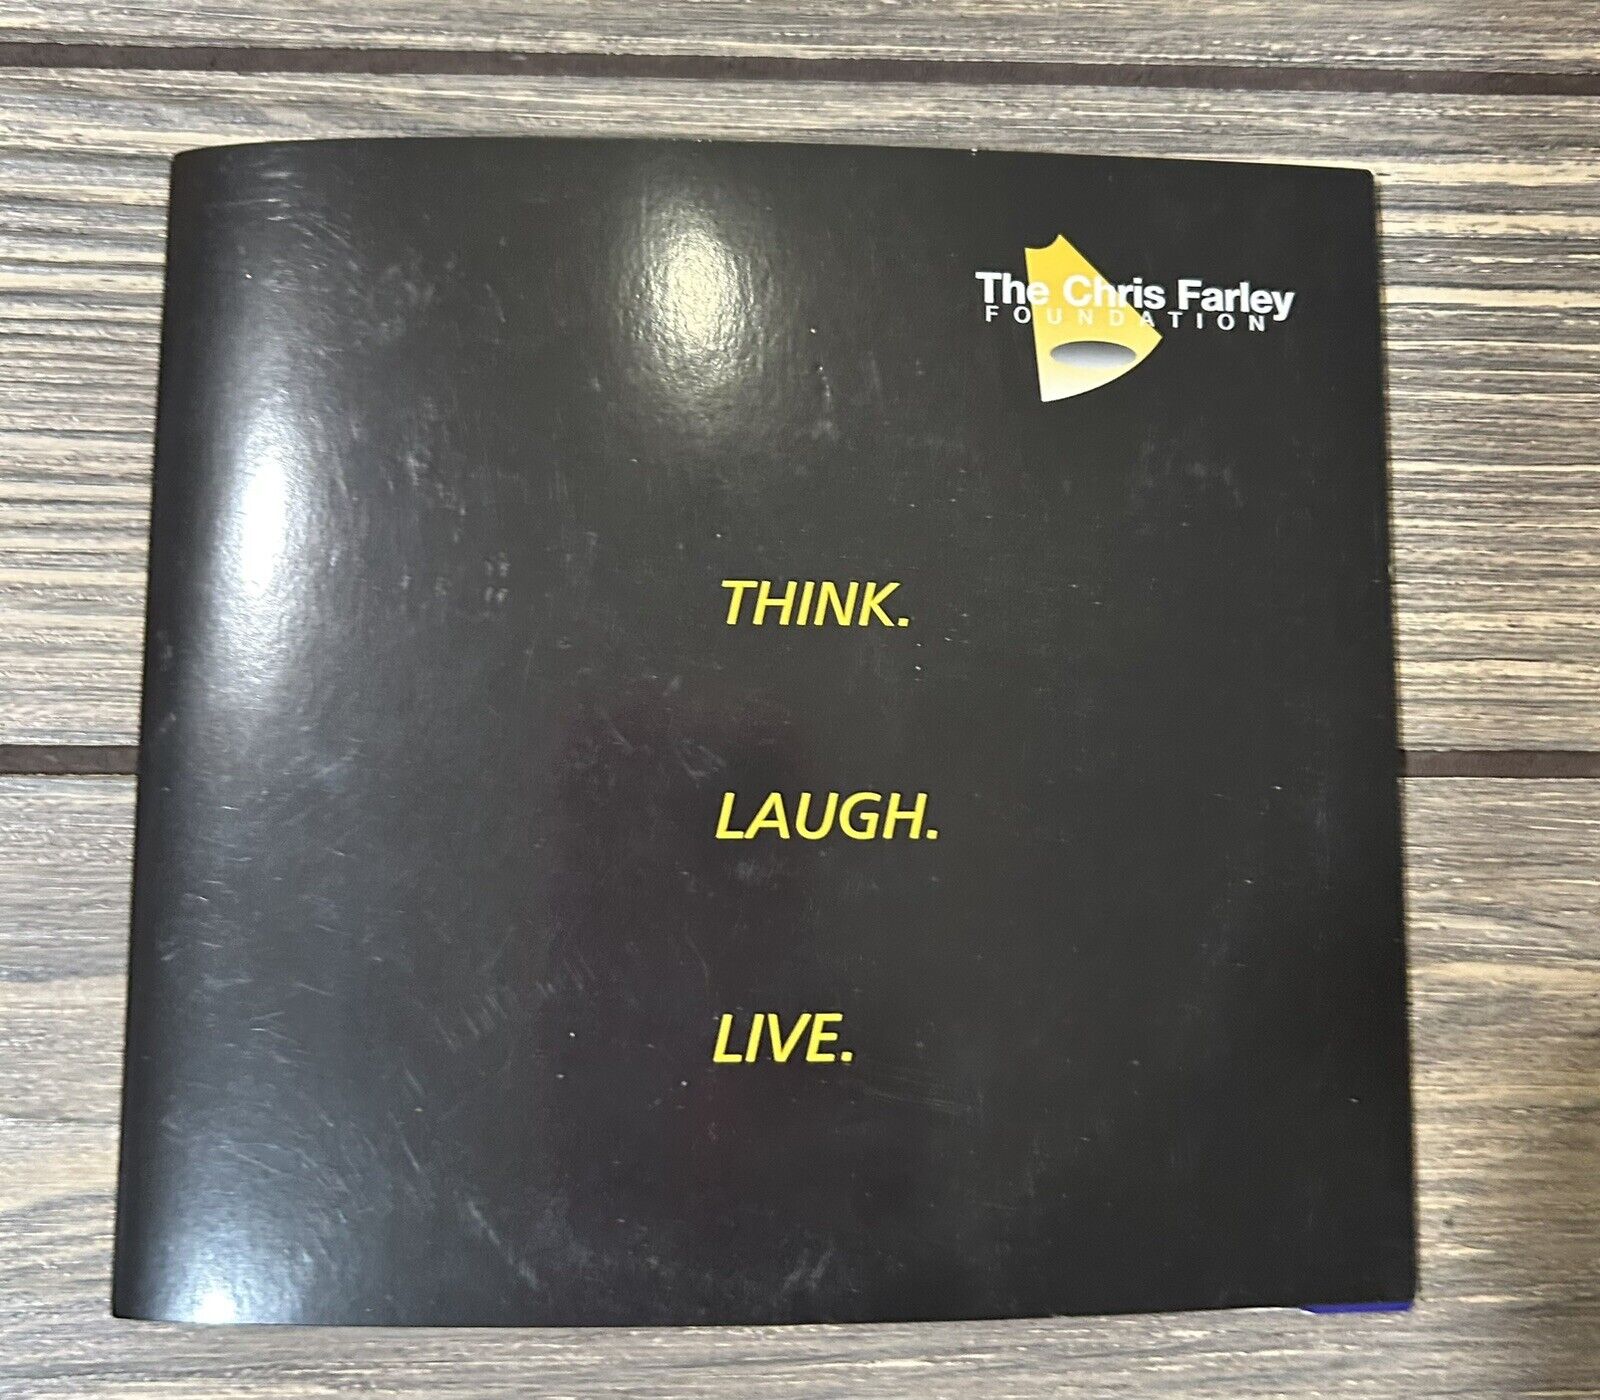 VTG RARE The Chris Farley Foundation Think Laugh Live CD